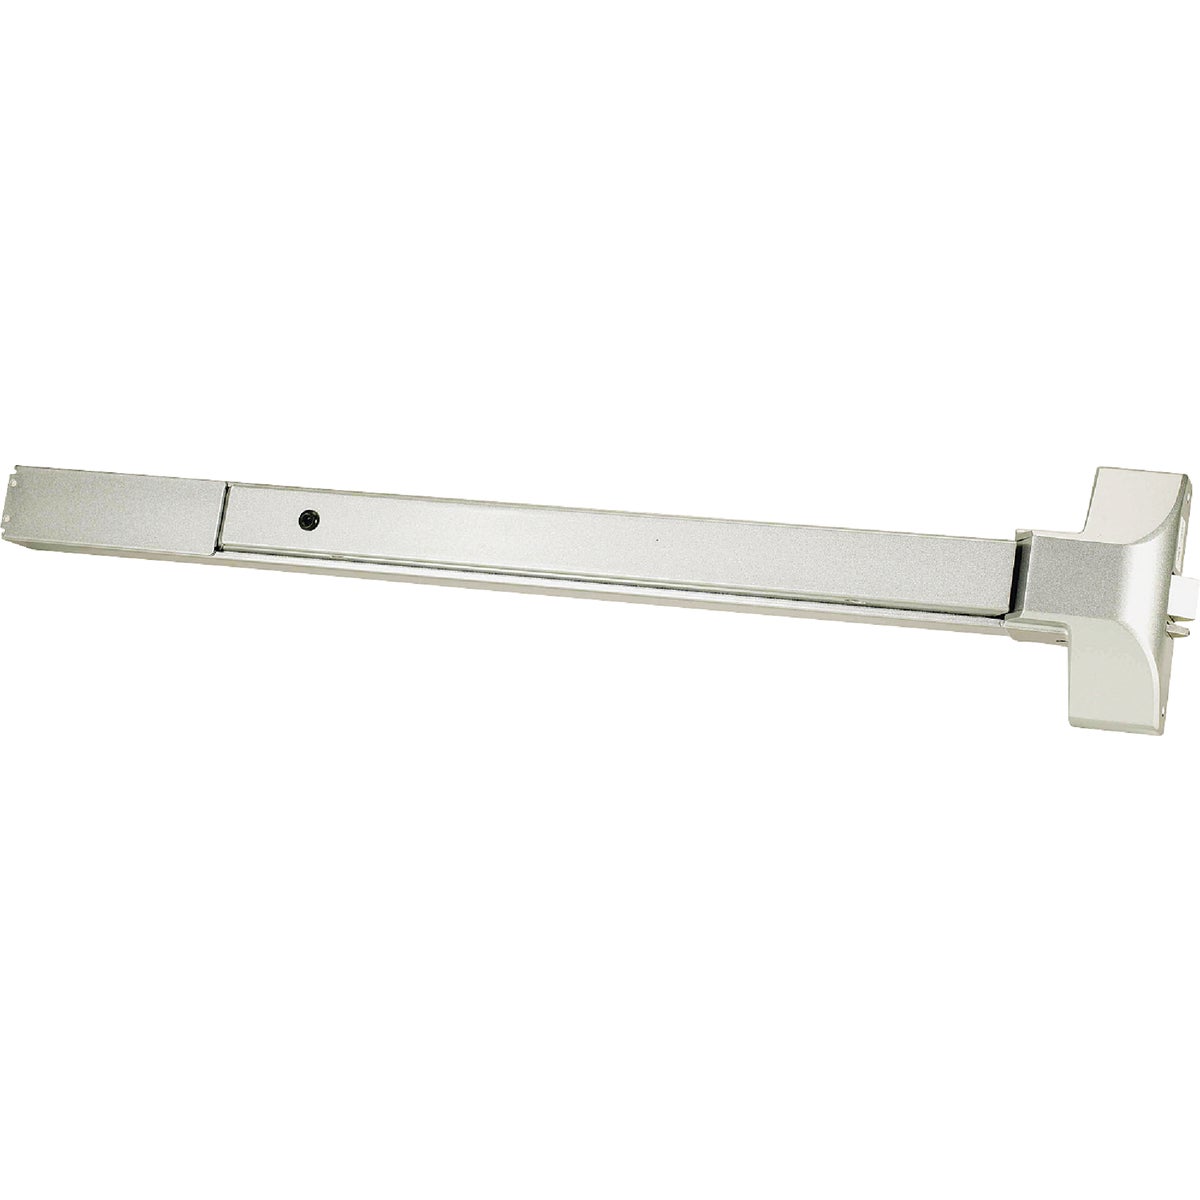 Item 254460, Commercial heavy-duty Grade 1 exit device is an aluminum rim exit device 